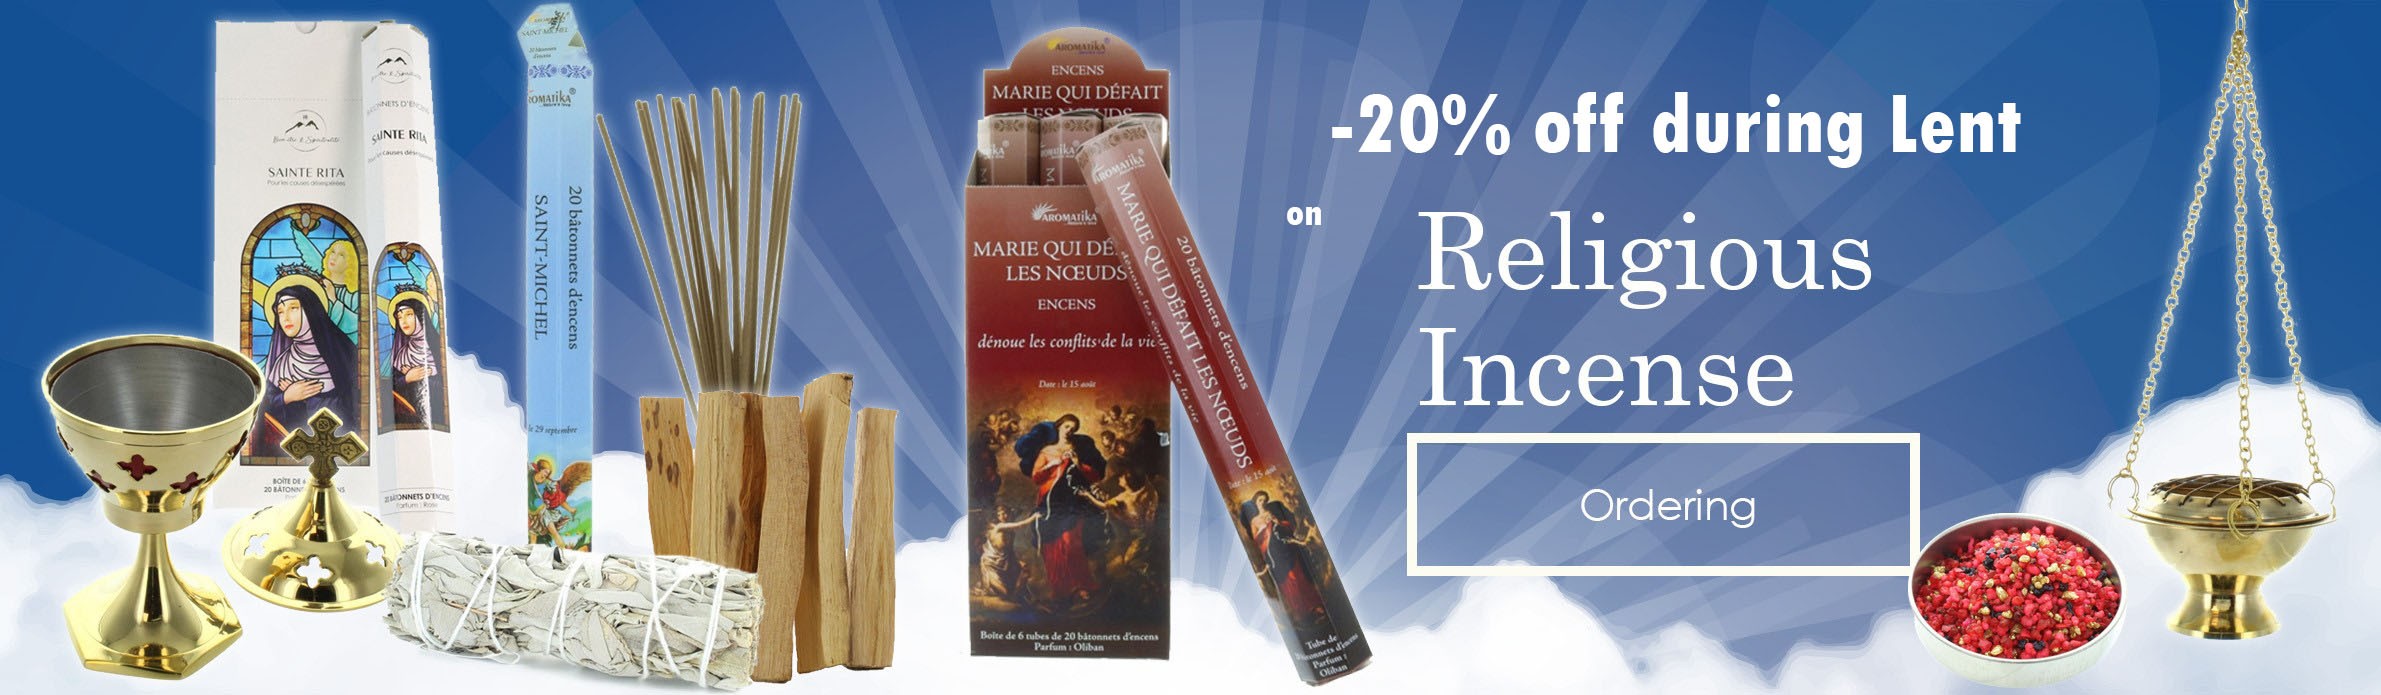 Religious incense